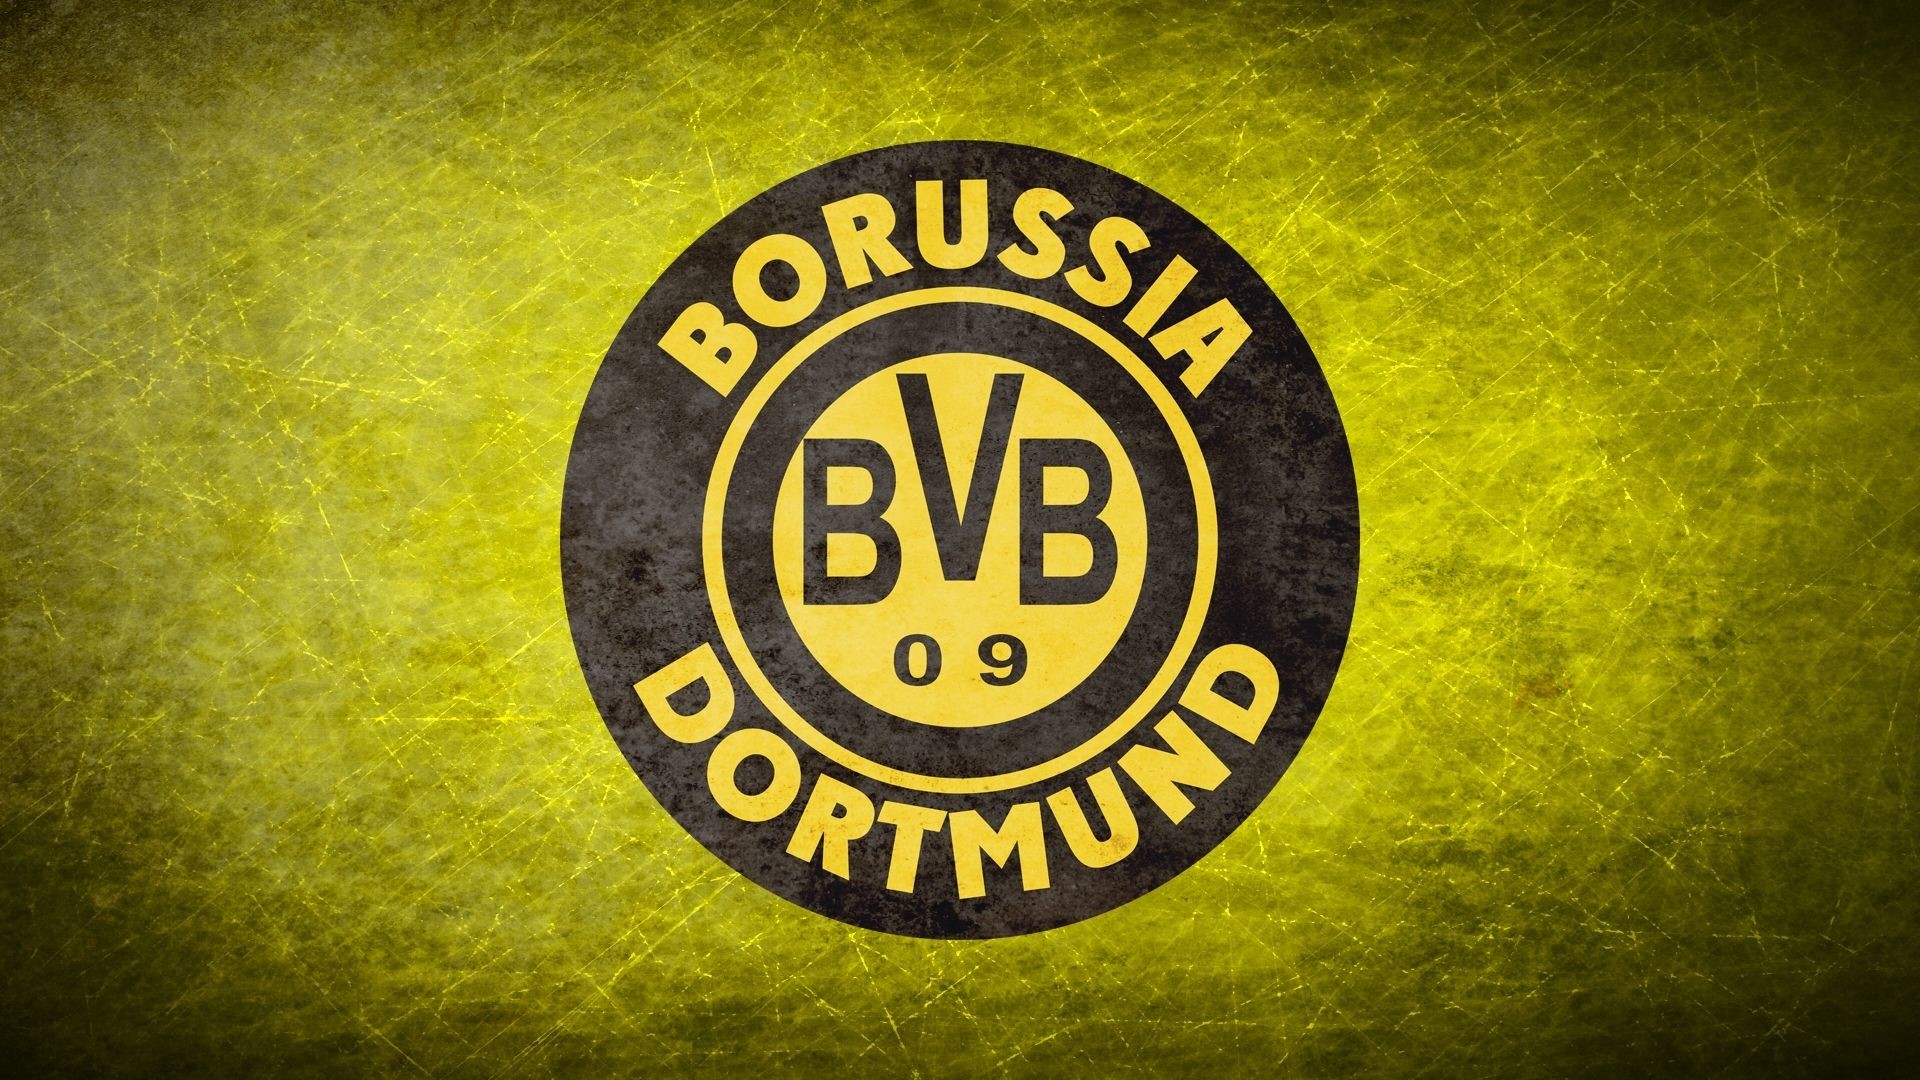 1920x1080 Wallpaper ÐÐ¾Ð³Ð¾ÑÐ¸Ð¿ ÑÑÑÐ±Ð¾Ð»ÑÐ½Ð¾Ð¹ ÐºÐ¾Ð¼Ð°Ð½Ð´Ñ Borussia Dortmund